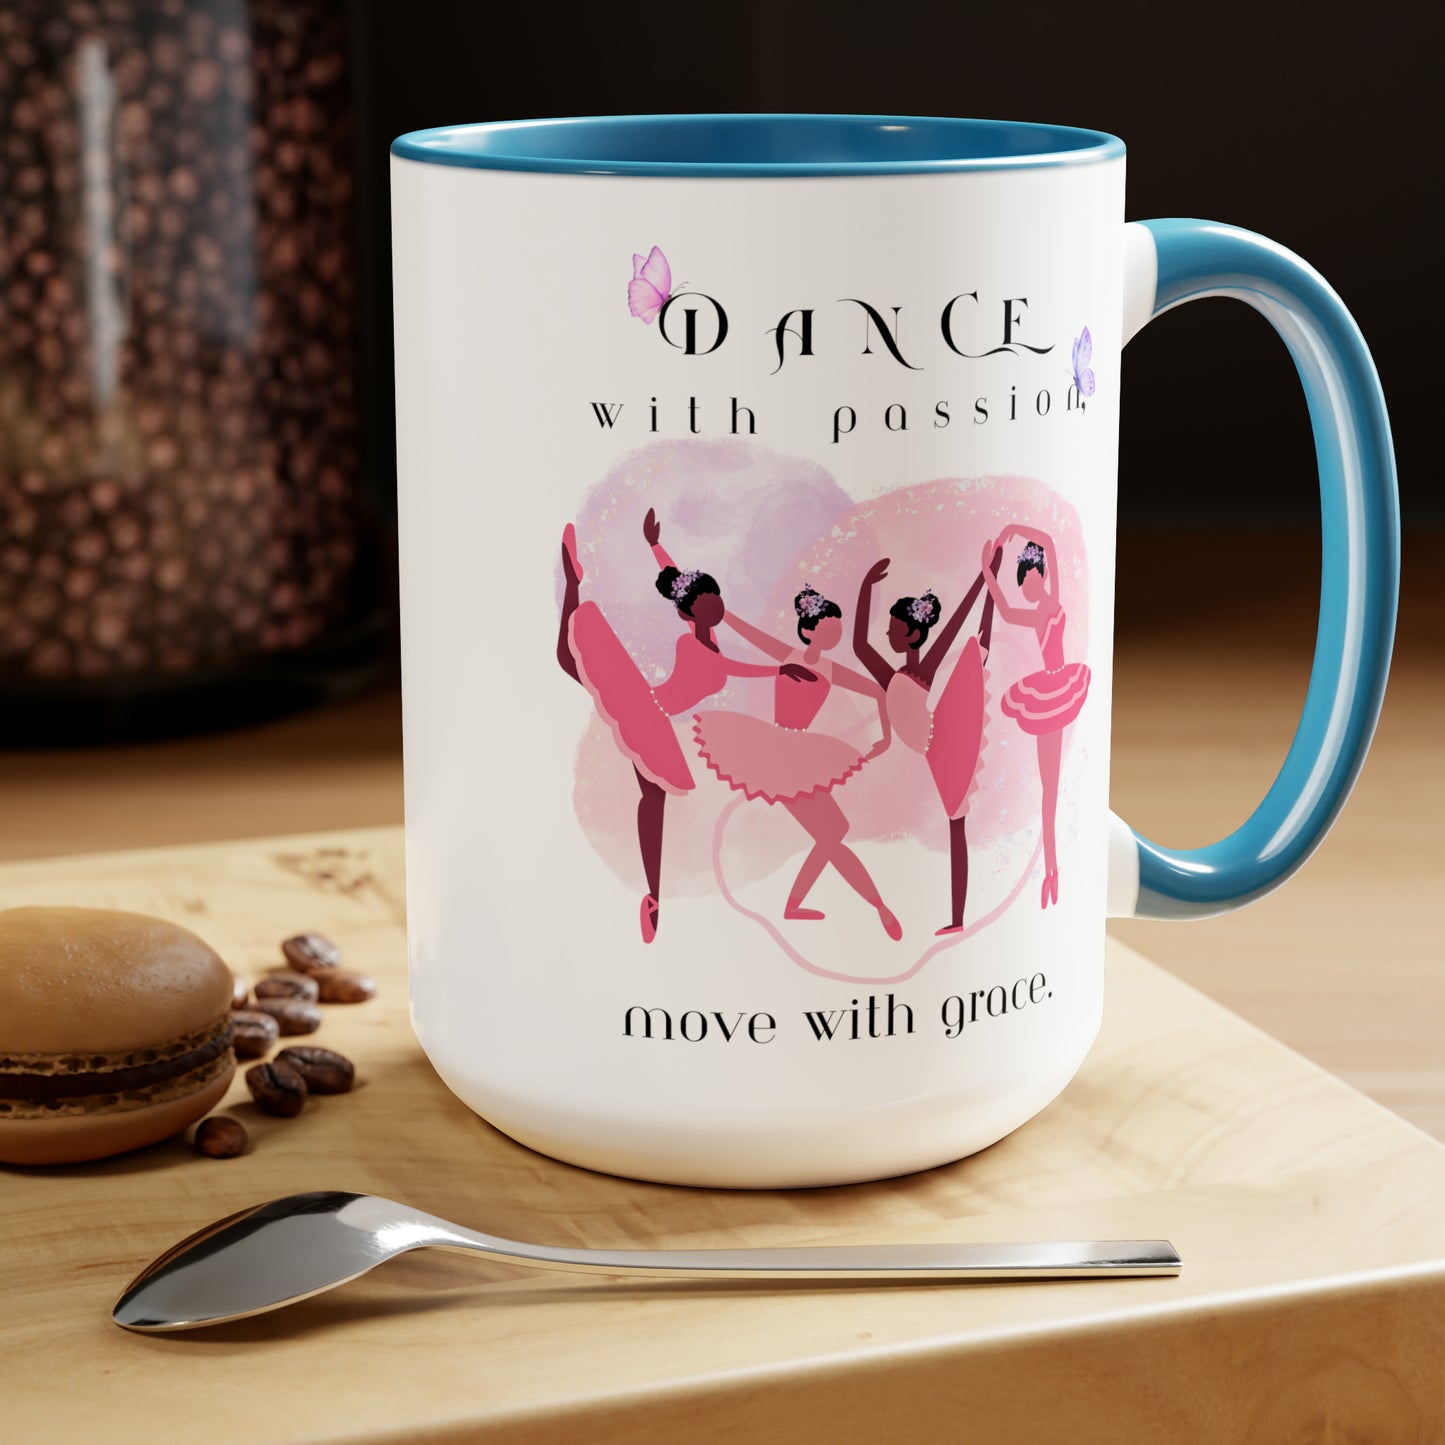 Two-Tone Coffee Mugs, 15oz - Dance with passion Ballerina - blue rim